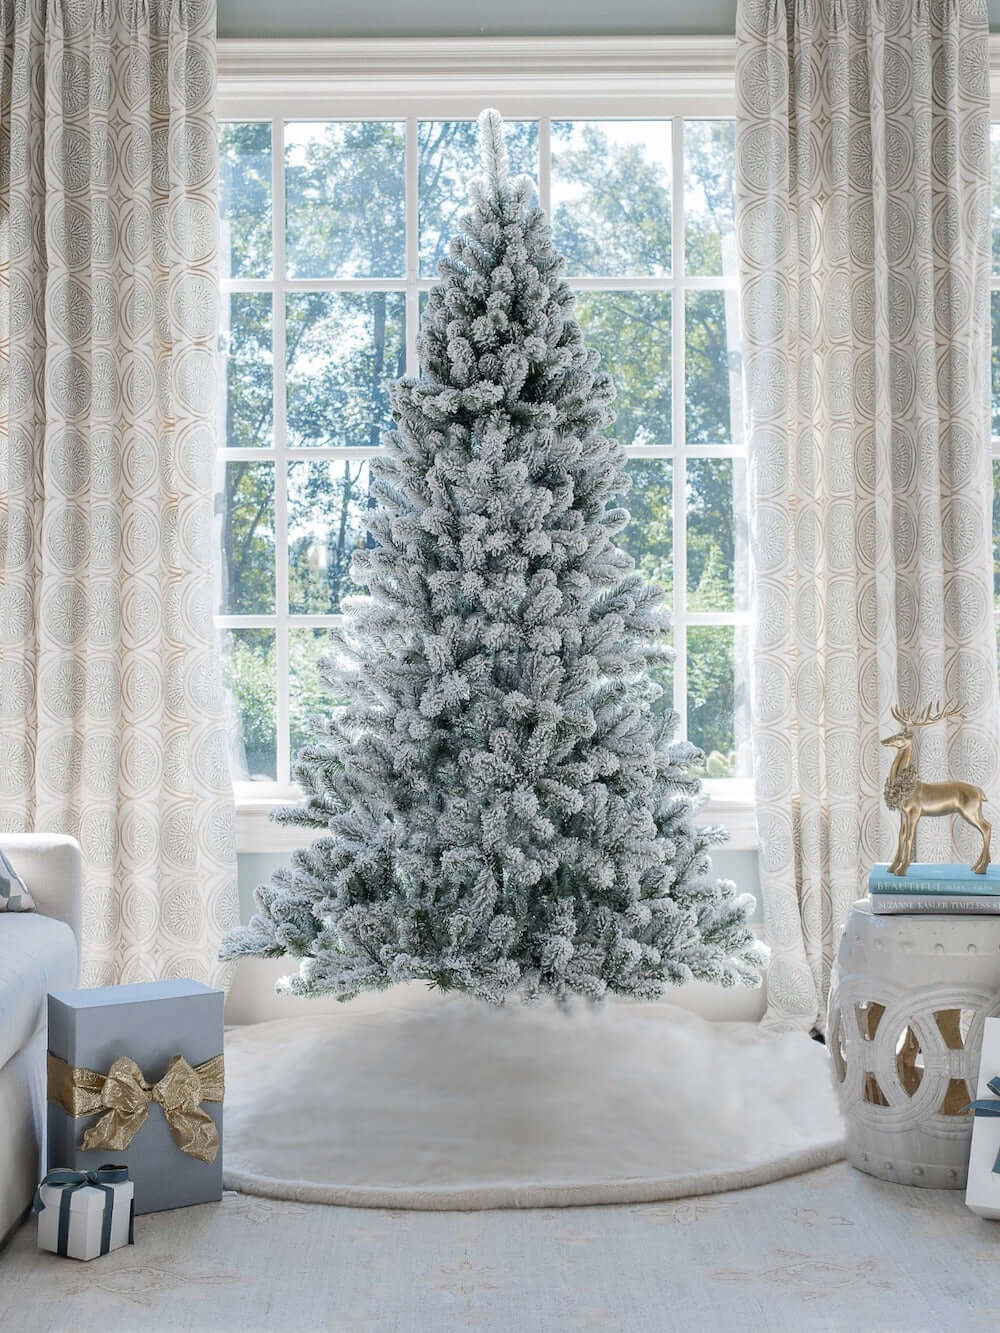 King of Christmas 7' Prince Flock® Artificial Christmas Tree with 400 Warm White LED Lights